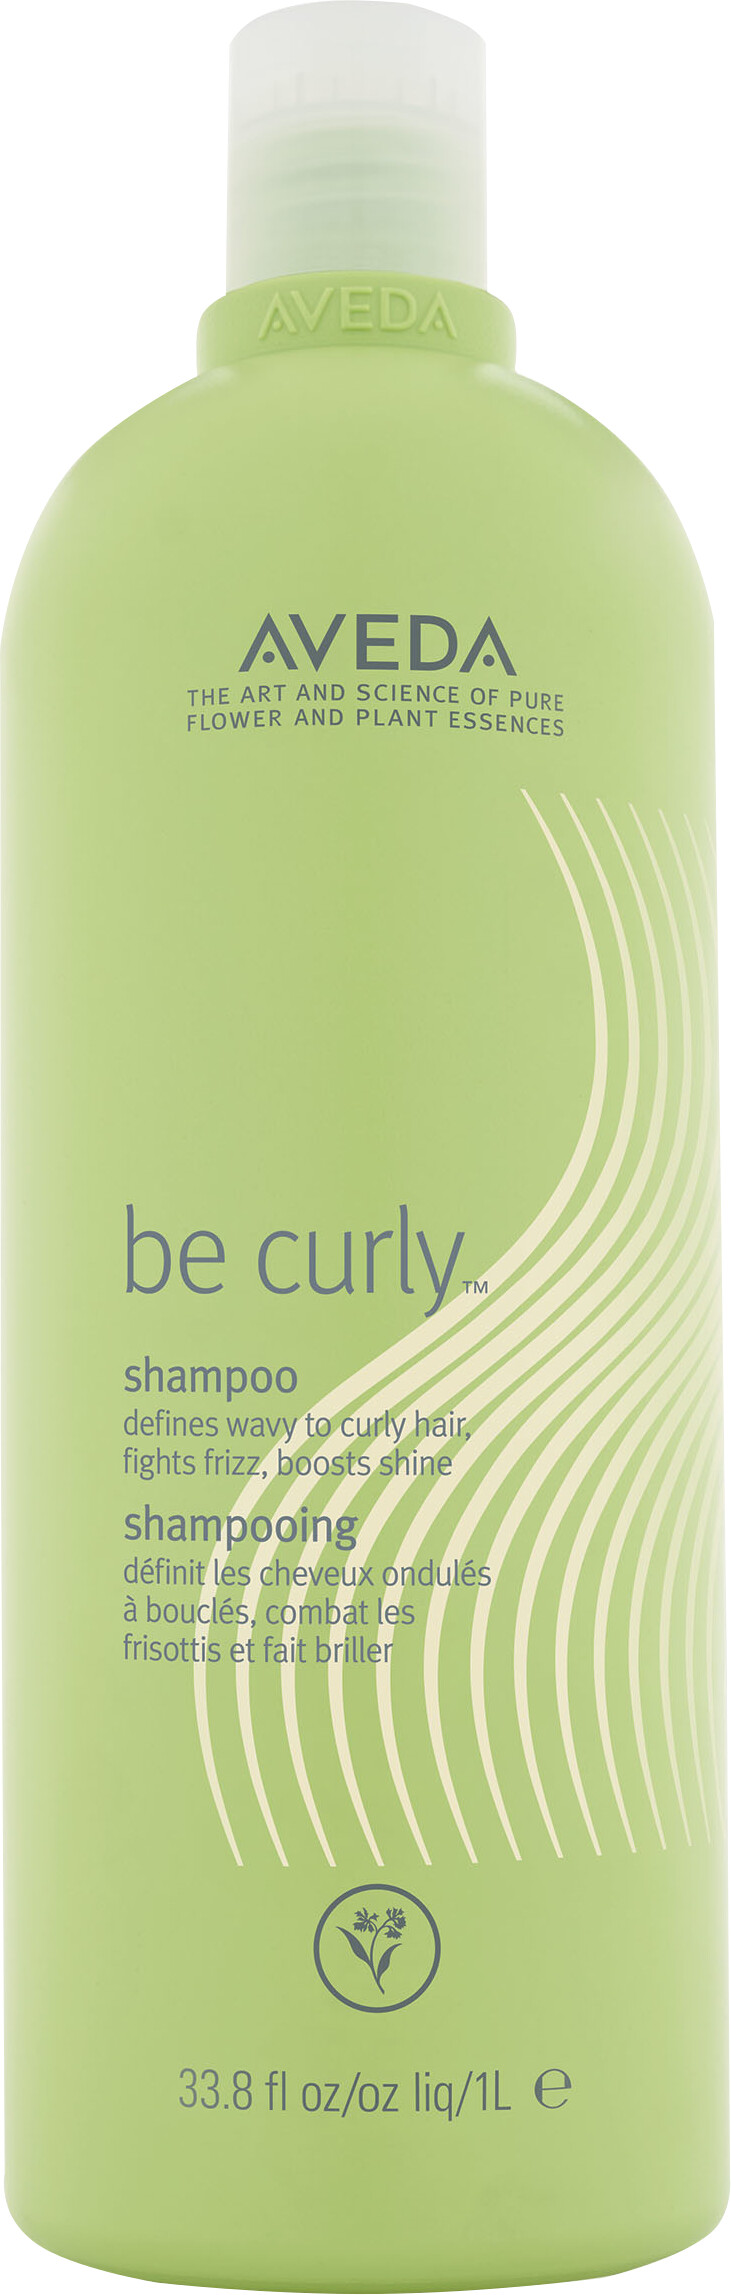 Aveda Be Curly Shampoo 1 litre